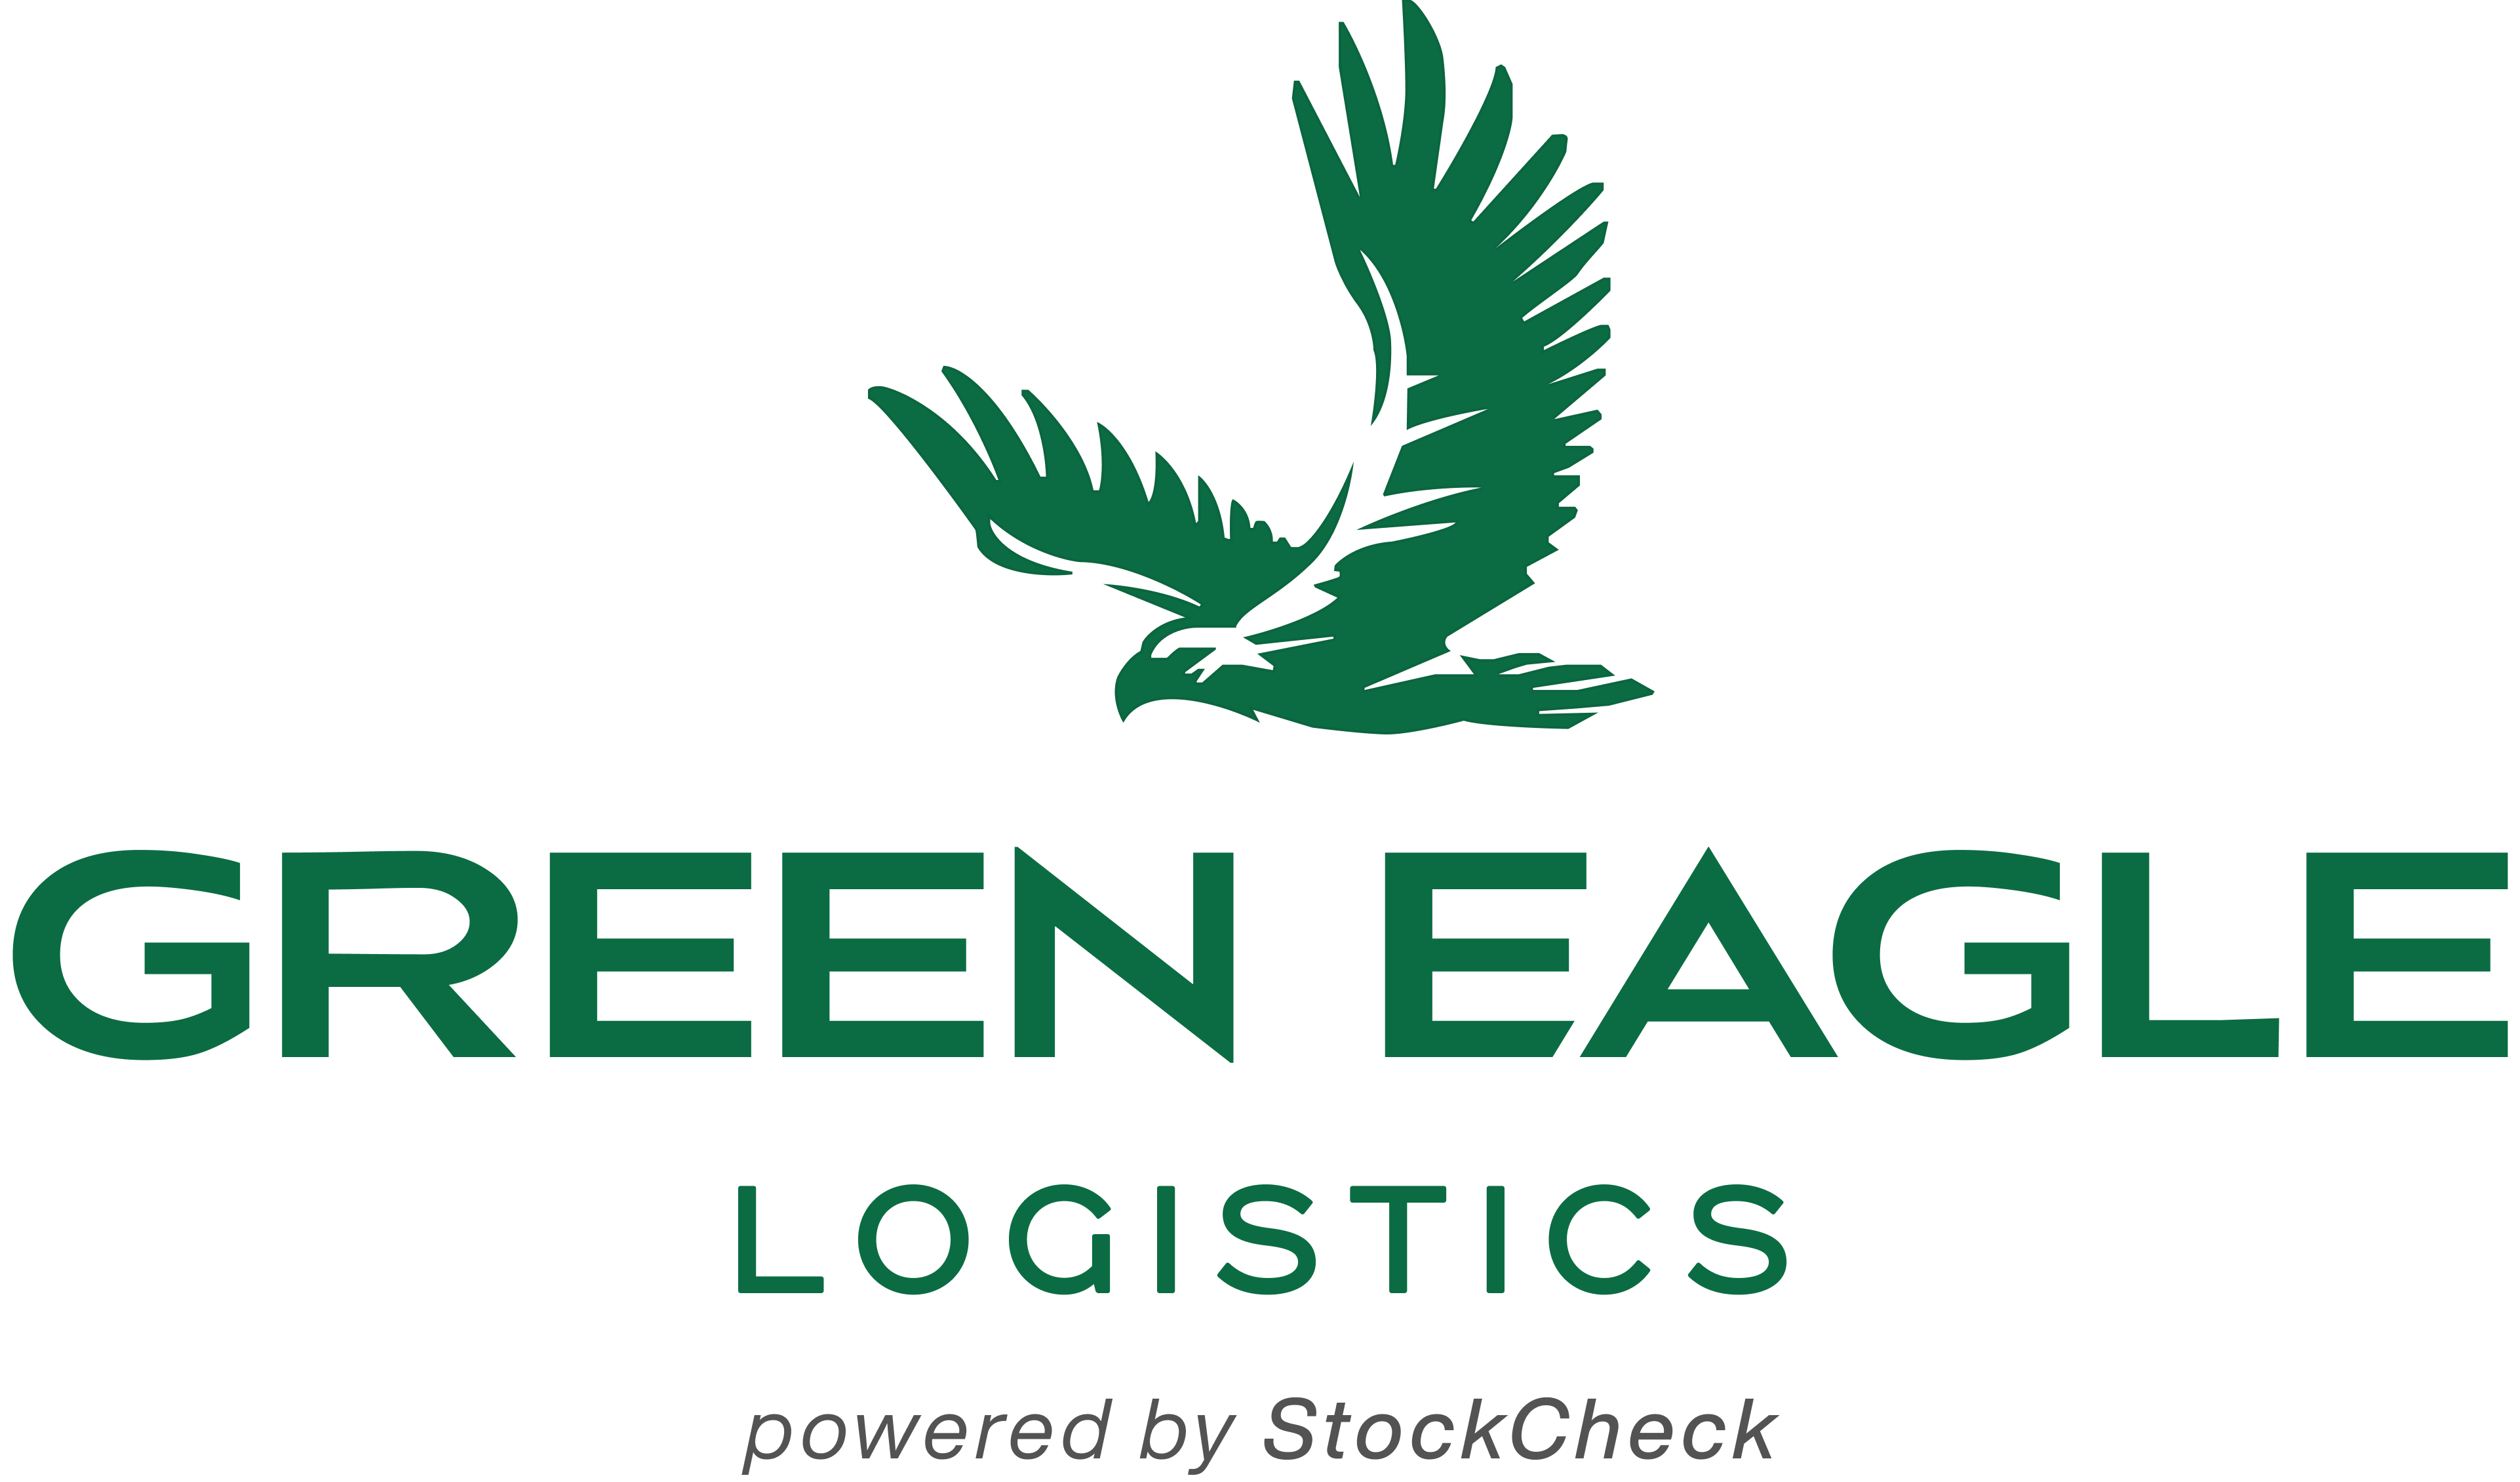 Greeneagle Logistics